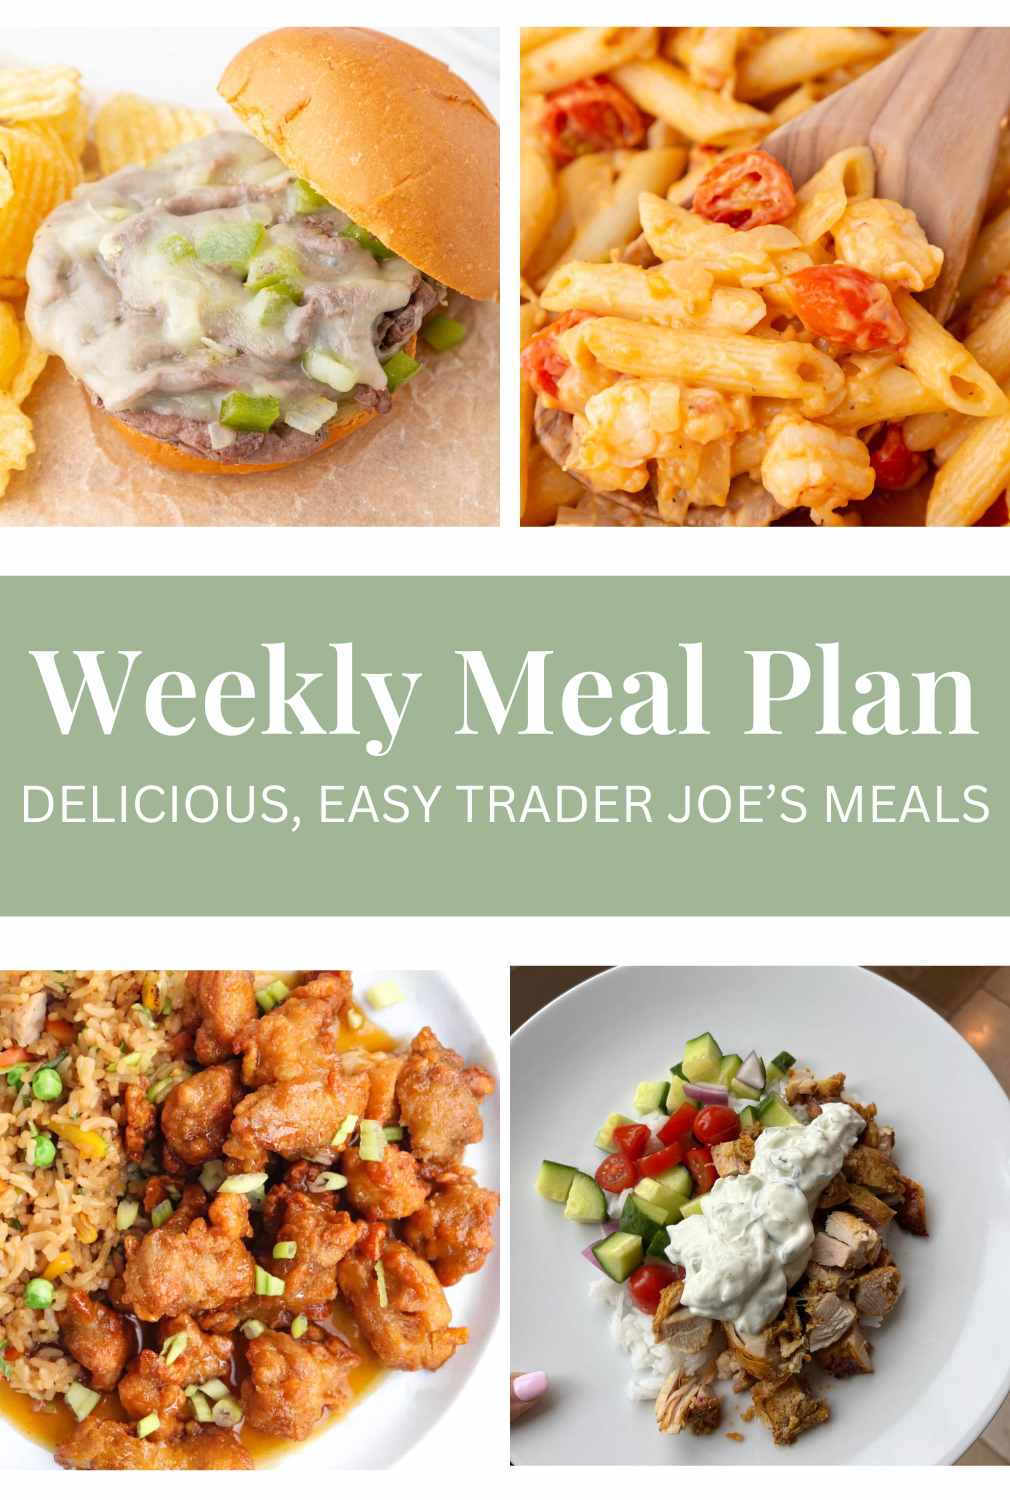 Trader Joe's weekly meal plan graphic.